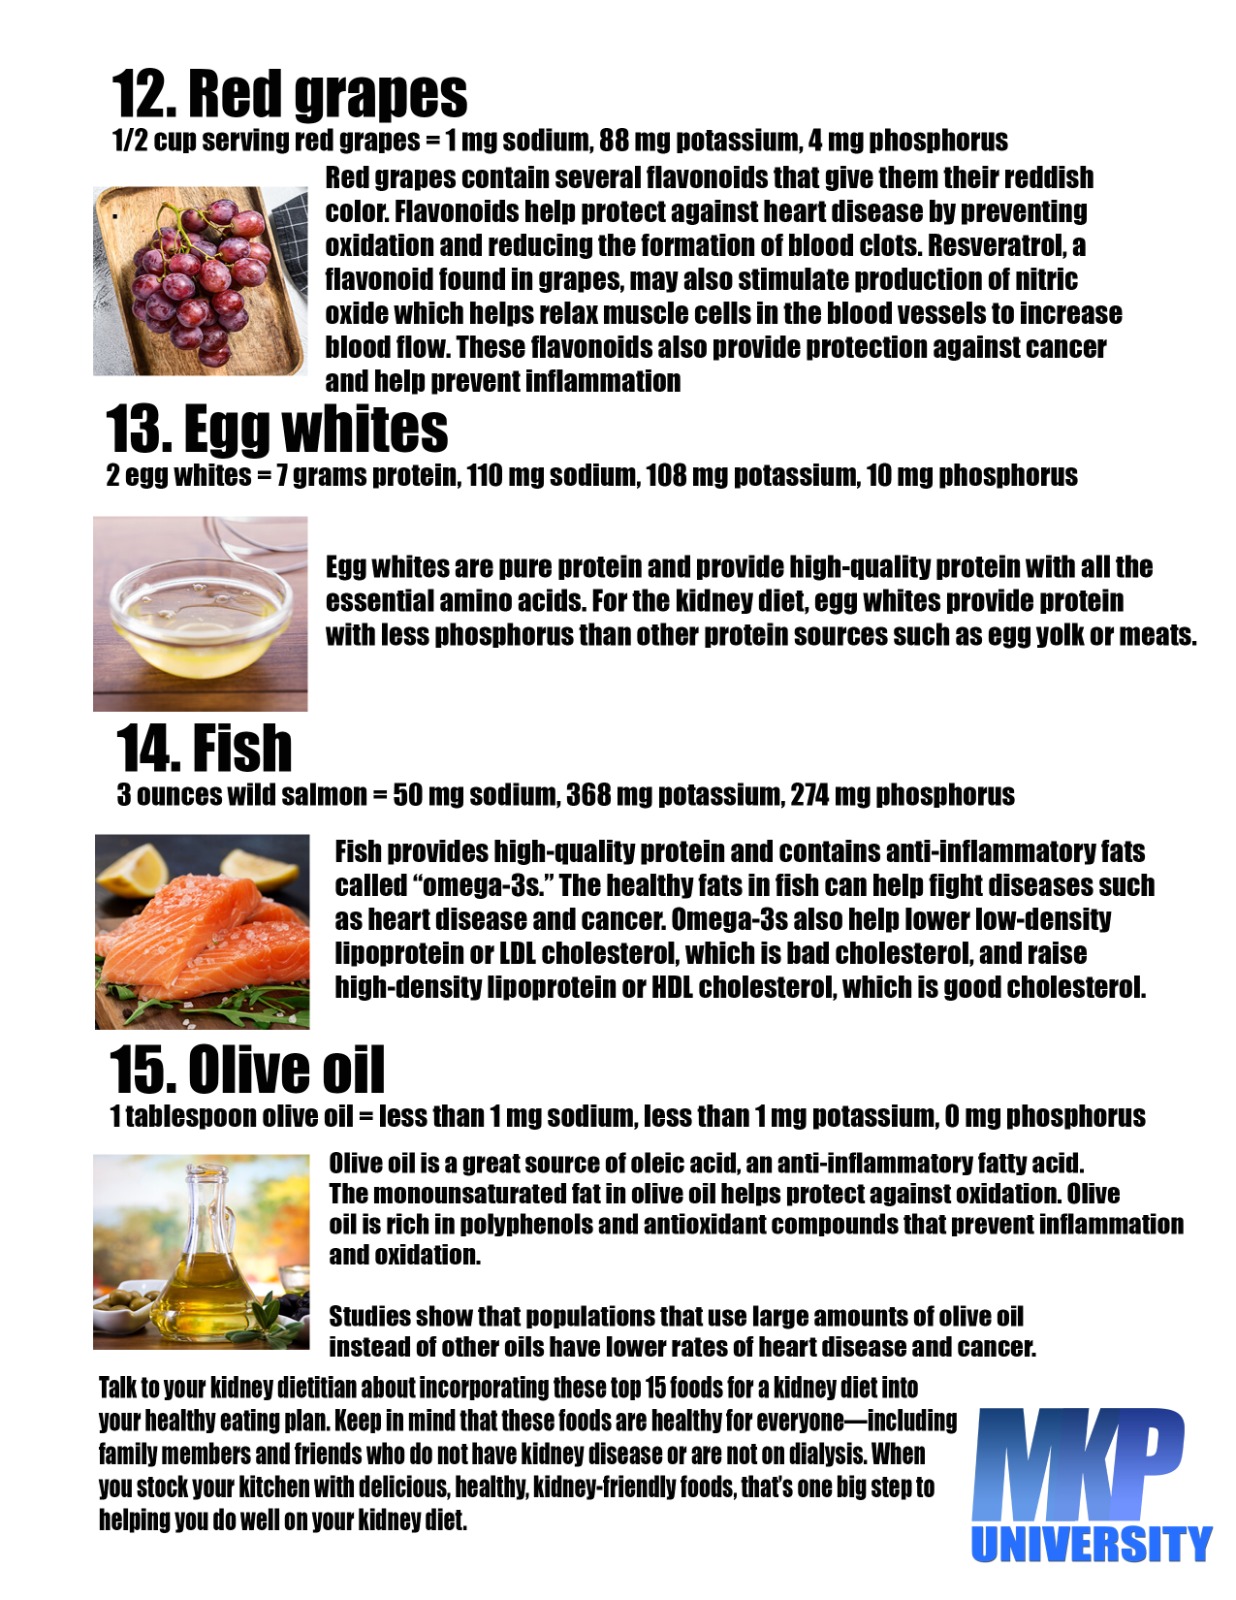 MKP's Top 15 Healthy Foods for People with Kidney Disease